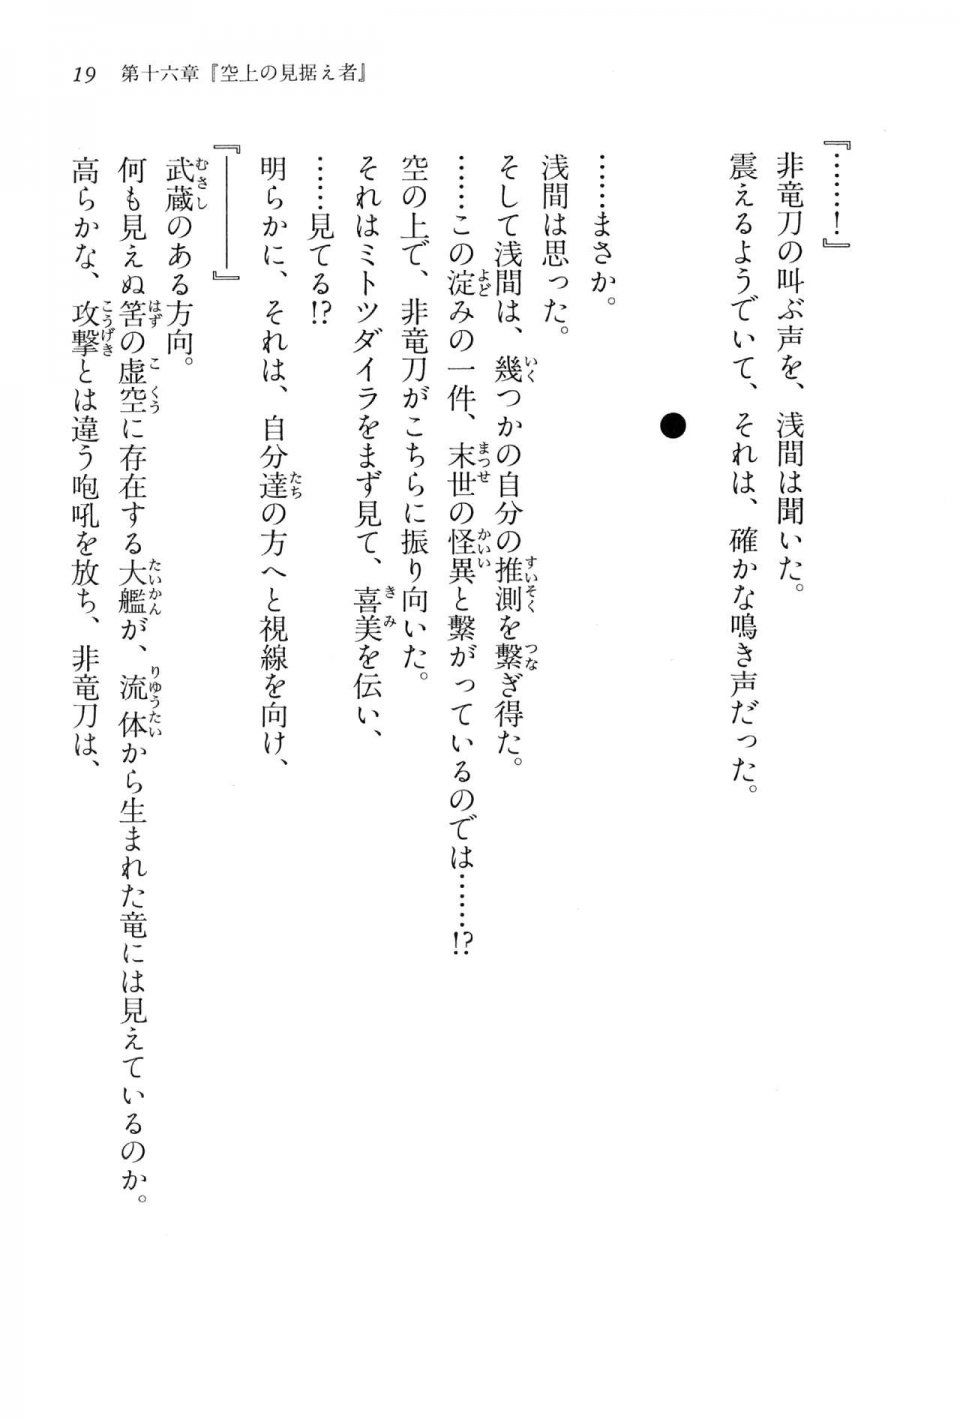 Kyoukai Senjou no Horizon BD Special Mininovel Vol 4(2B) - Photo #23